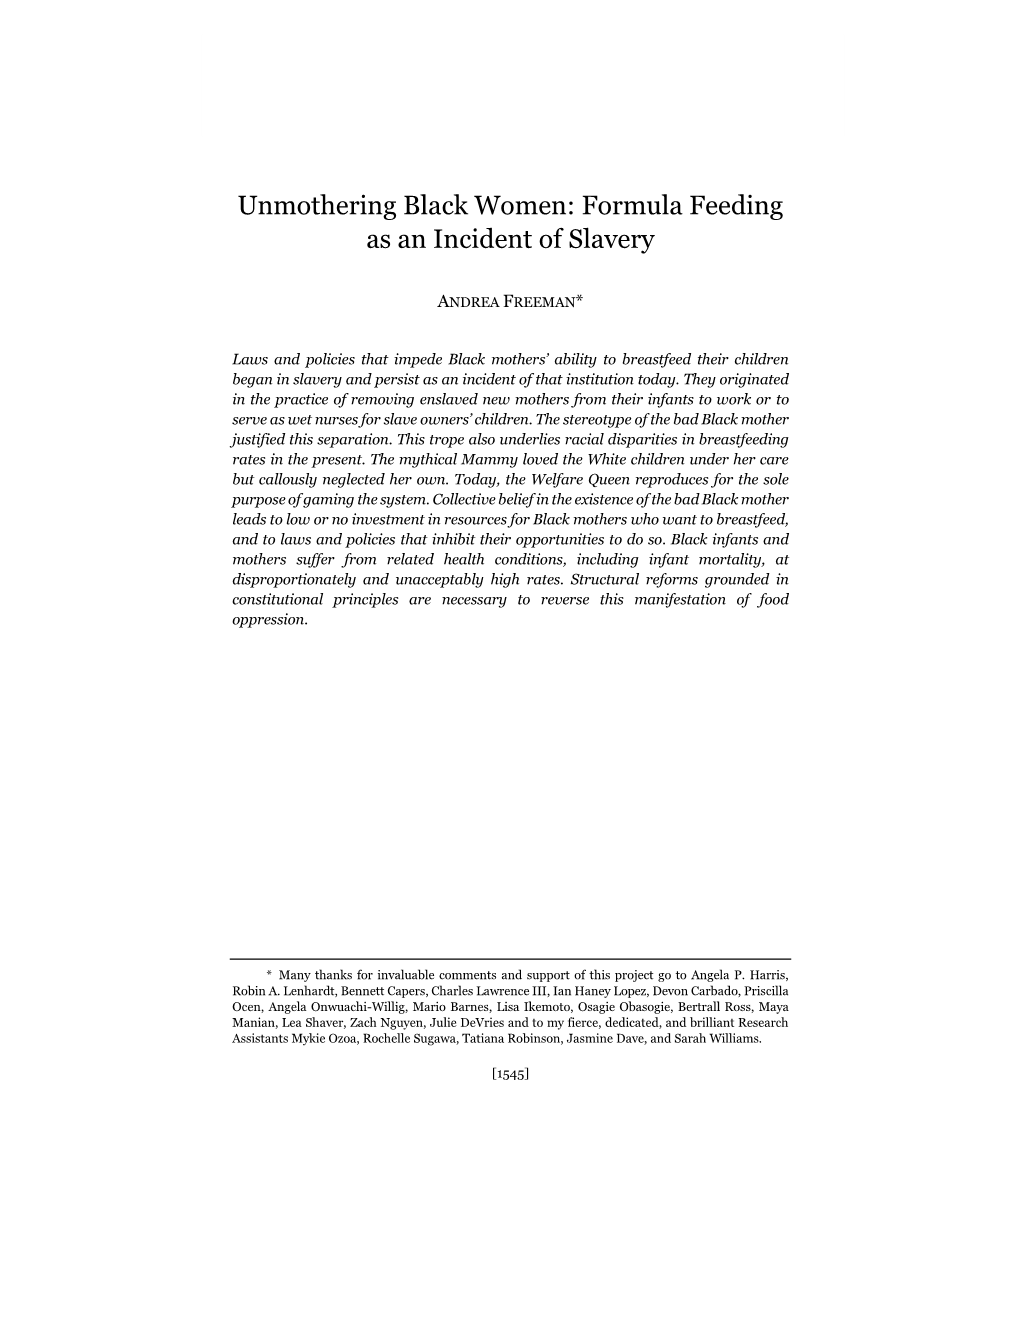 Unmothering Black Women: Formula Feeding As an Incident of Slavery